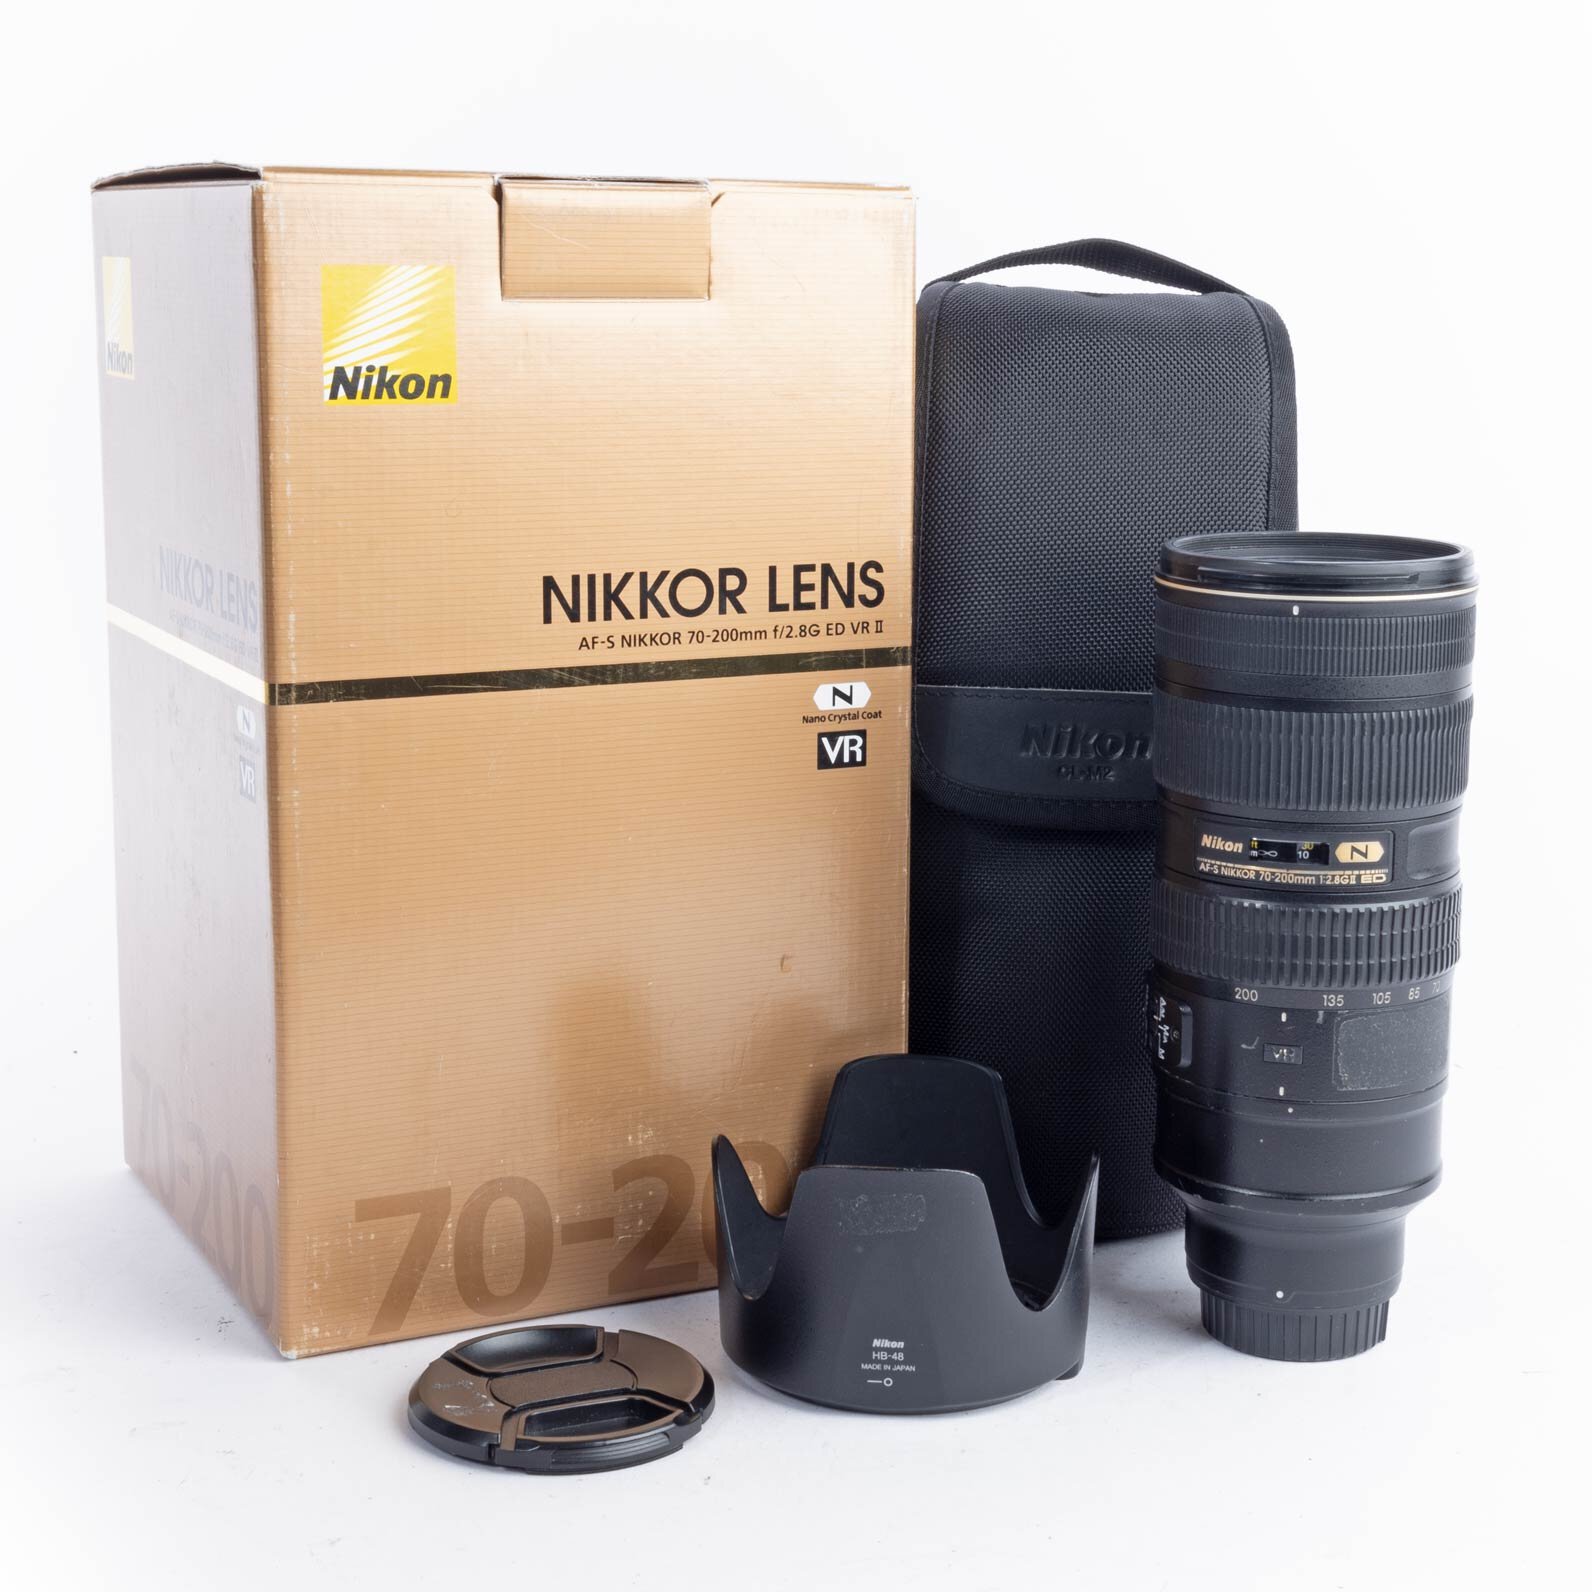 Nikon AFS Nikkor 2.8/70-200mm G ED VR II